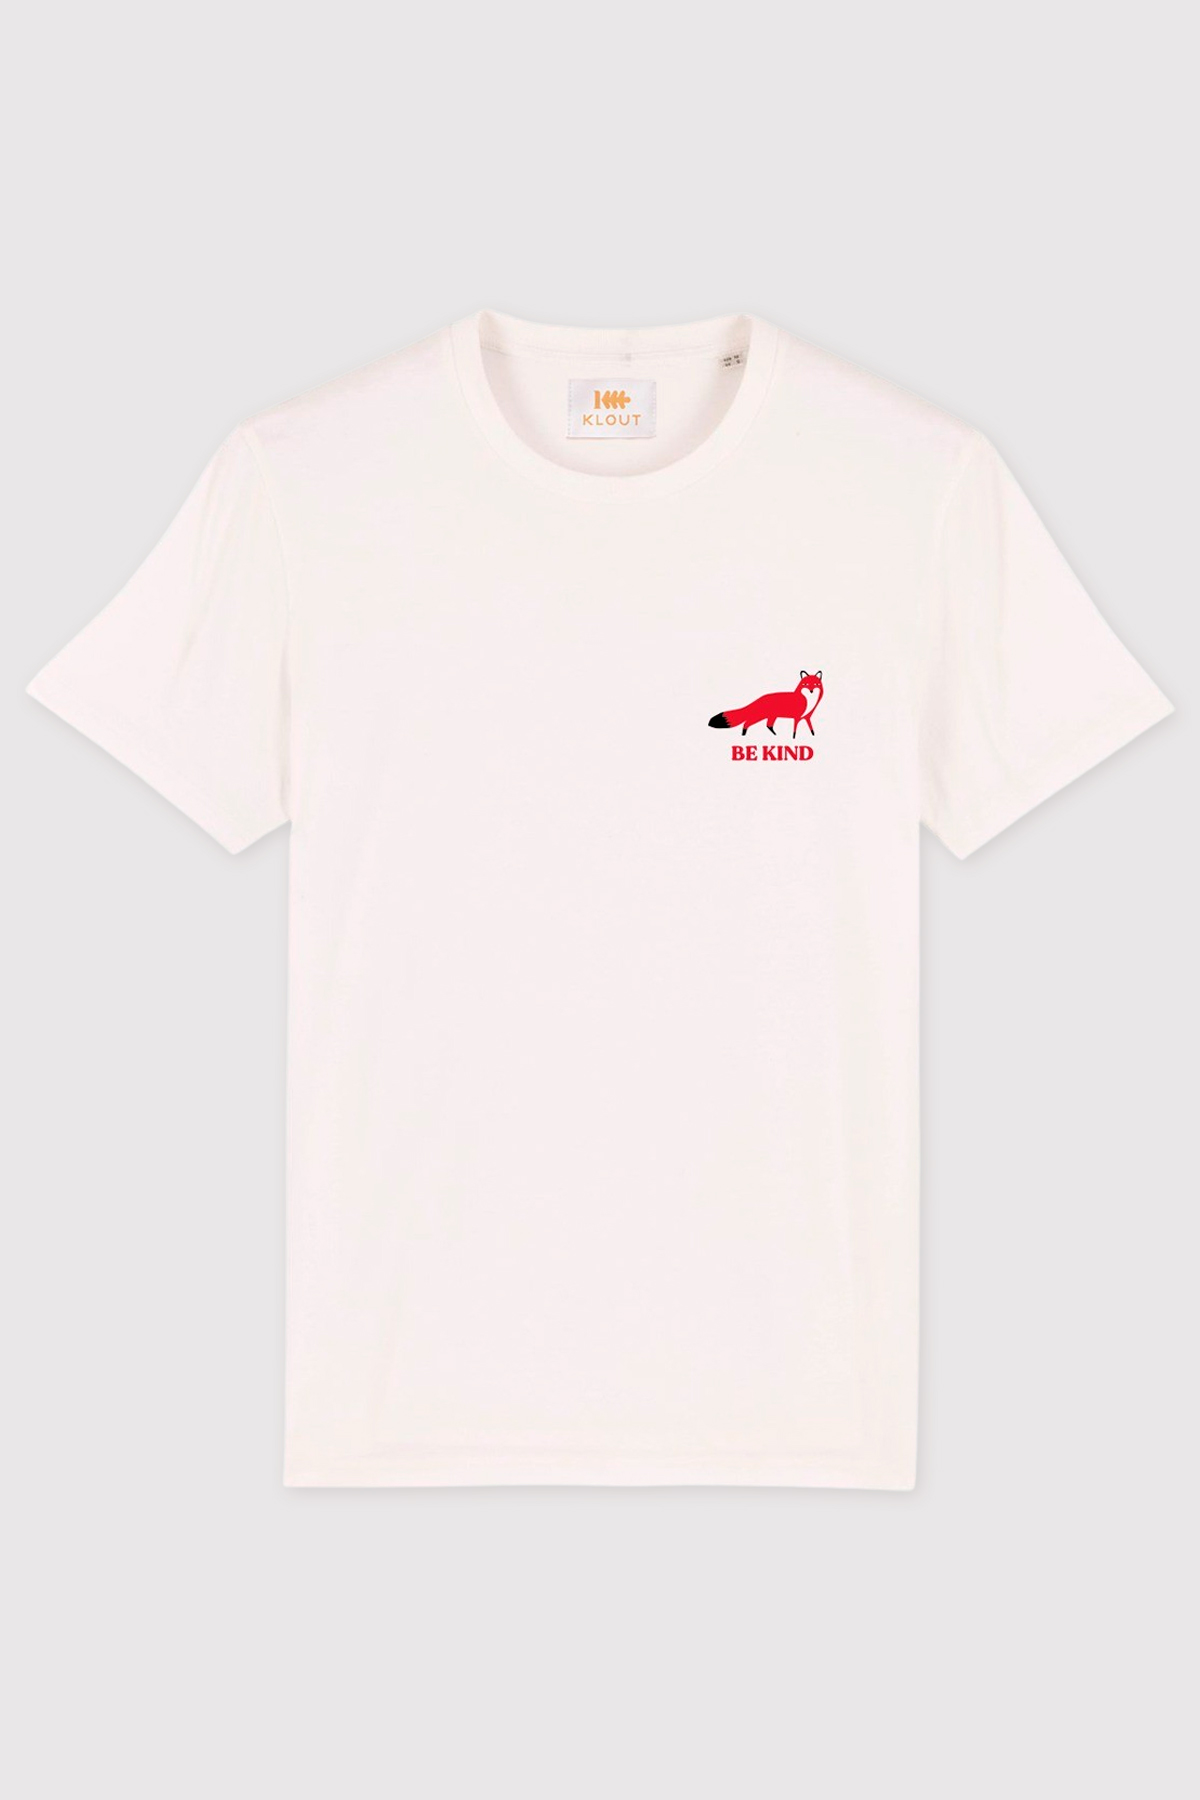 Camiseta Klout Foxy Blanco Unisex